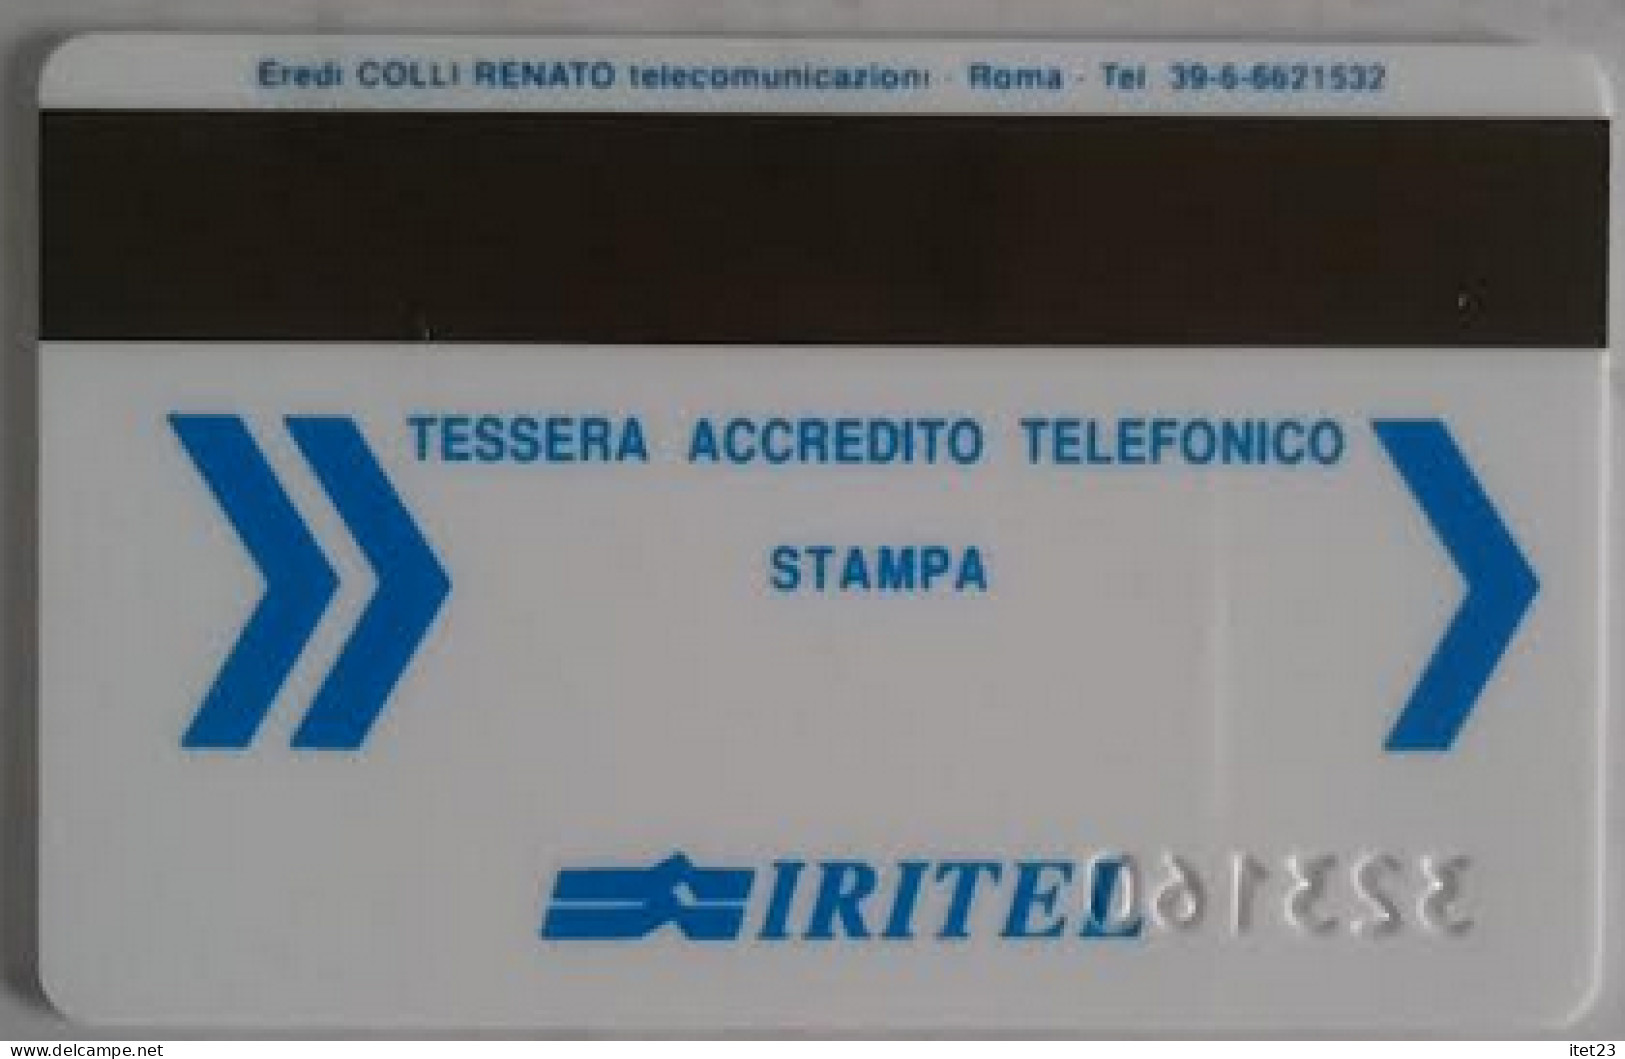 SCHEDA TELEFONICA IRITEL- 50° CAMPIONATI INTERNAZIONALI D'ITALIA C&C 4033A - Verzamelingen